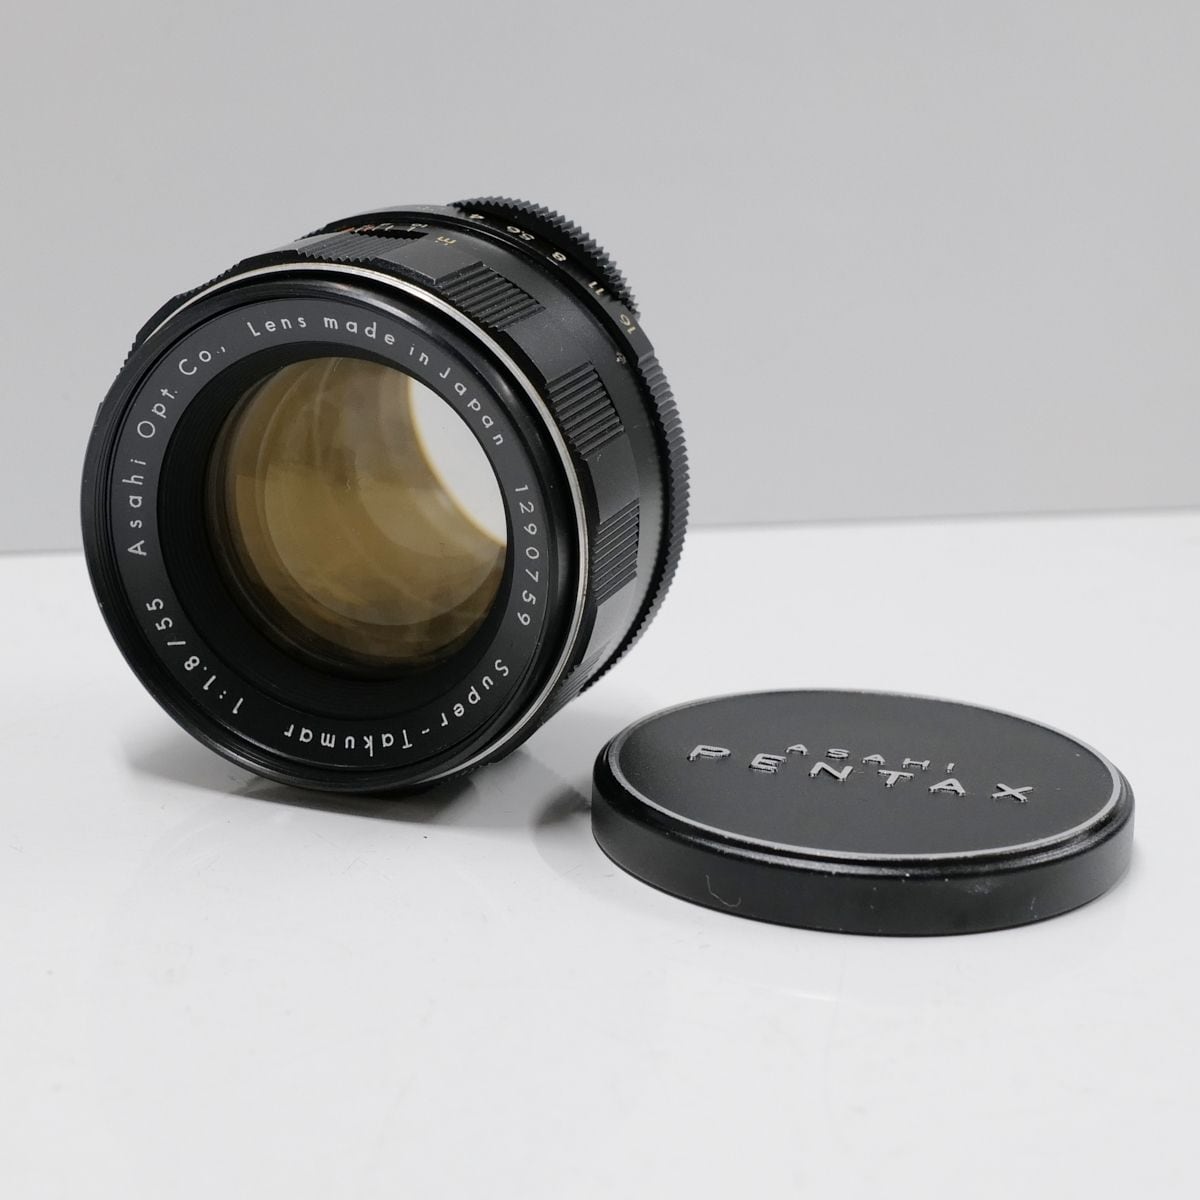 Asahi Opt. Co. Super Takumar mm F1.8 交換レンズ USED品 MF 標準